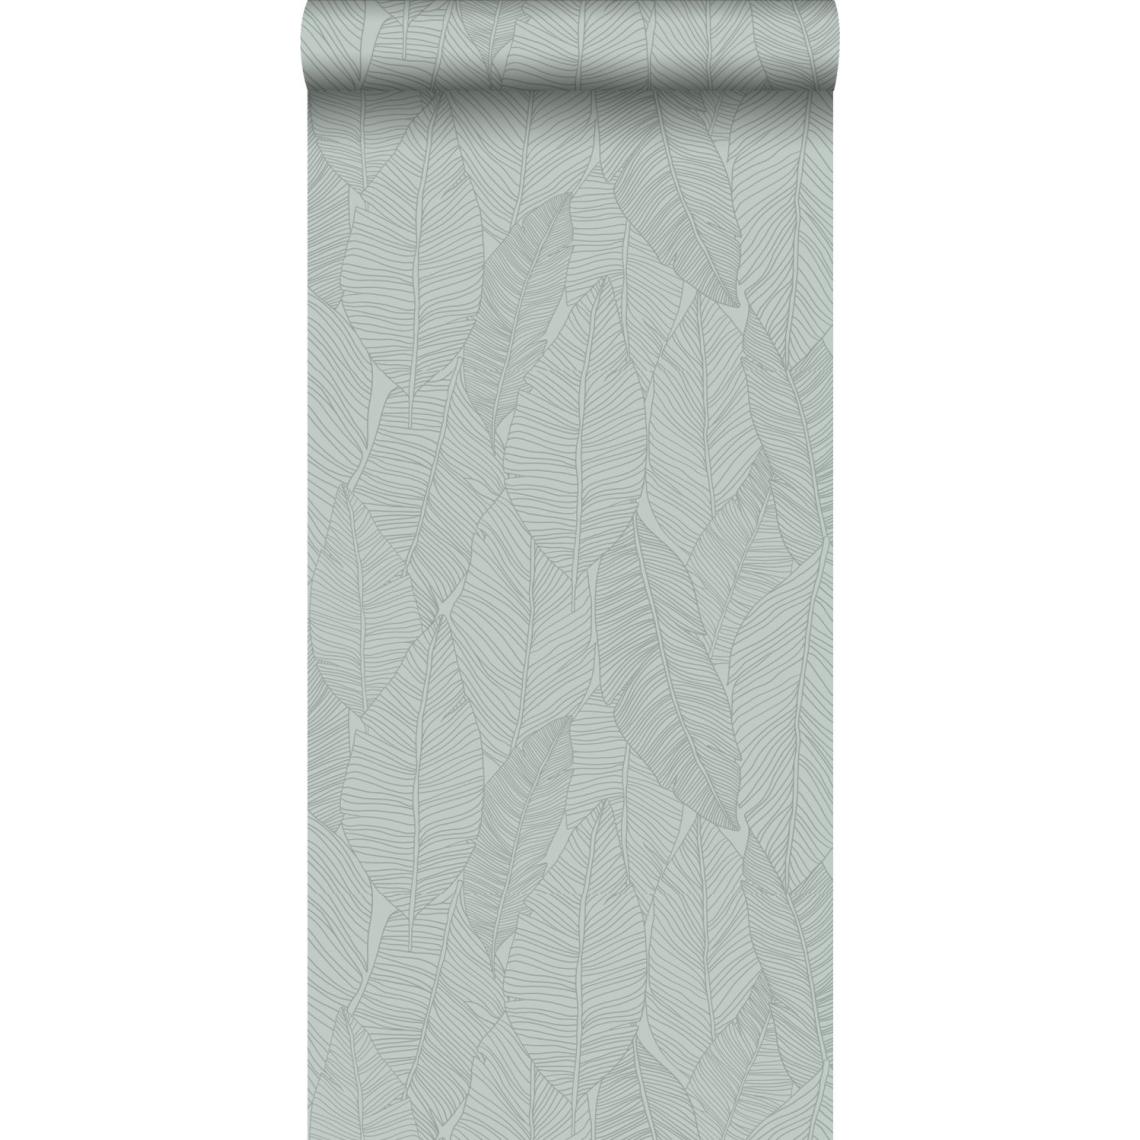 Origin - Origin papier peint feuilles vert grisé - 347711 - 0.53 x 10.05 m - Papier peint